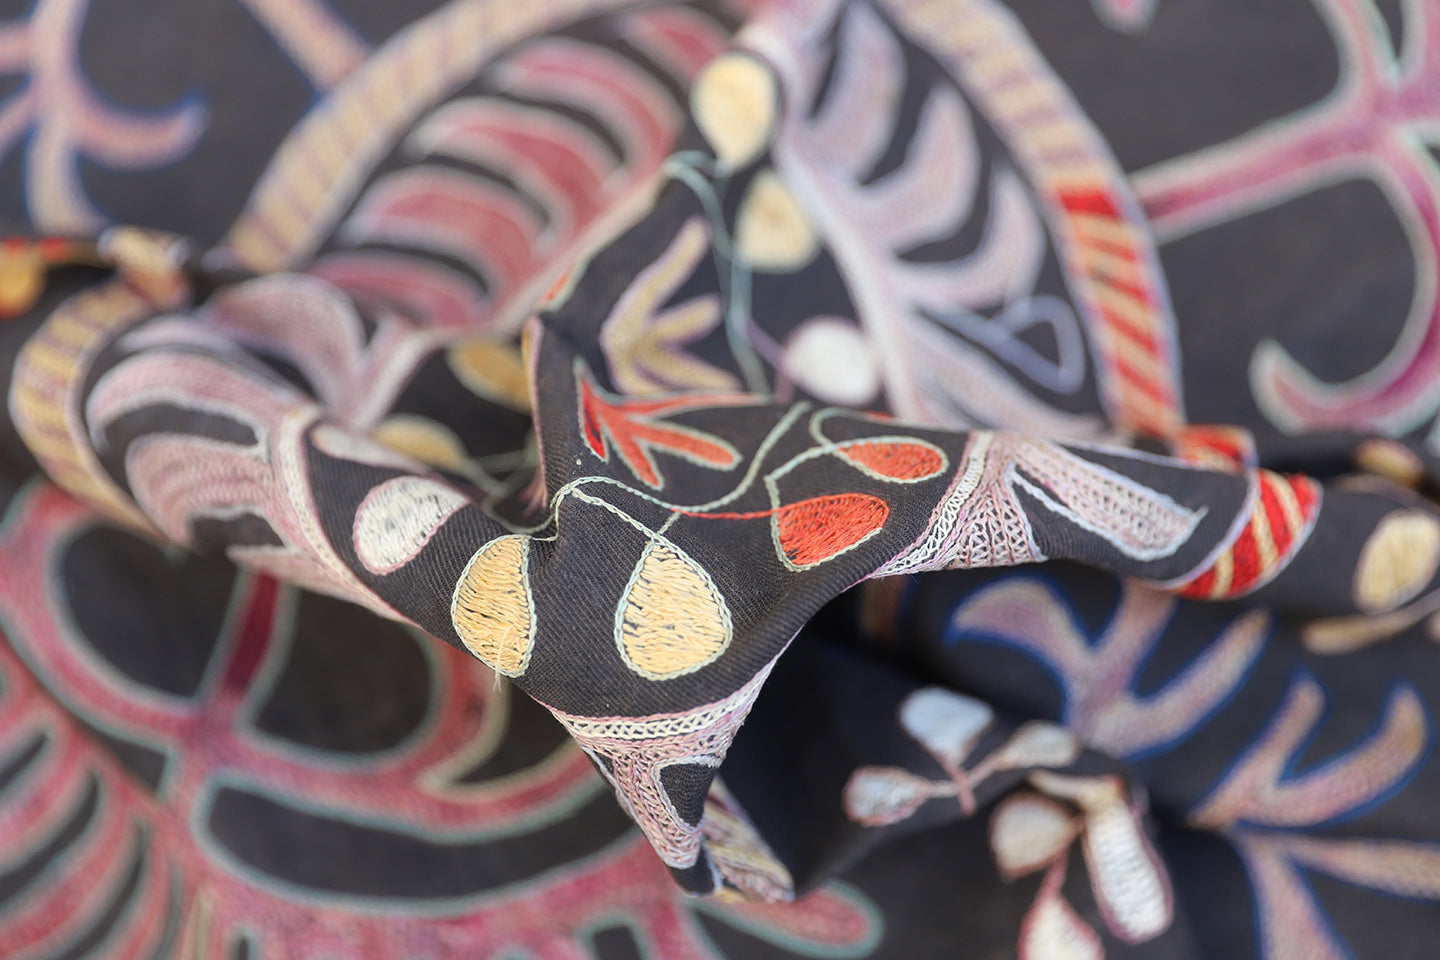 2'6"x2'6" Antique Uzbek Hand Embroidered Suzani Laqai Textile